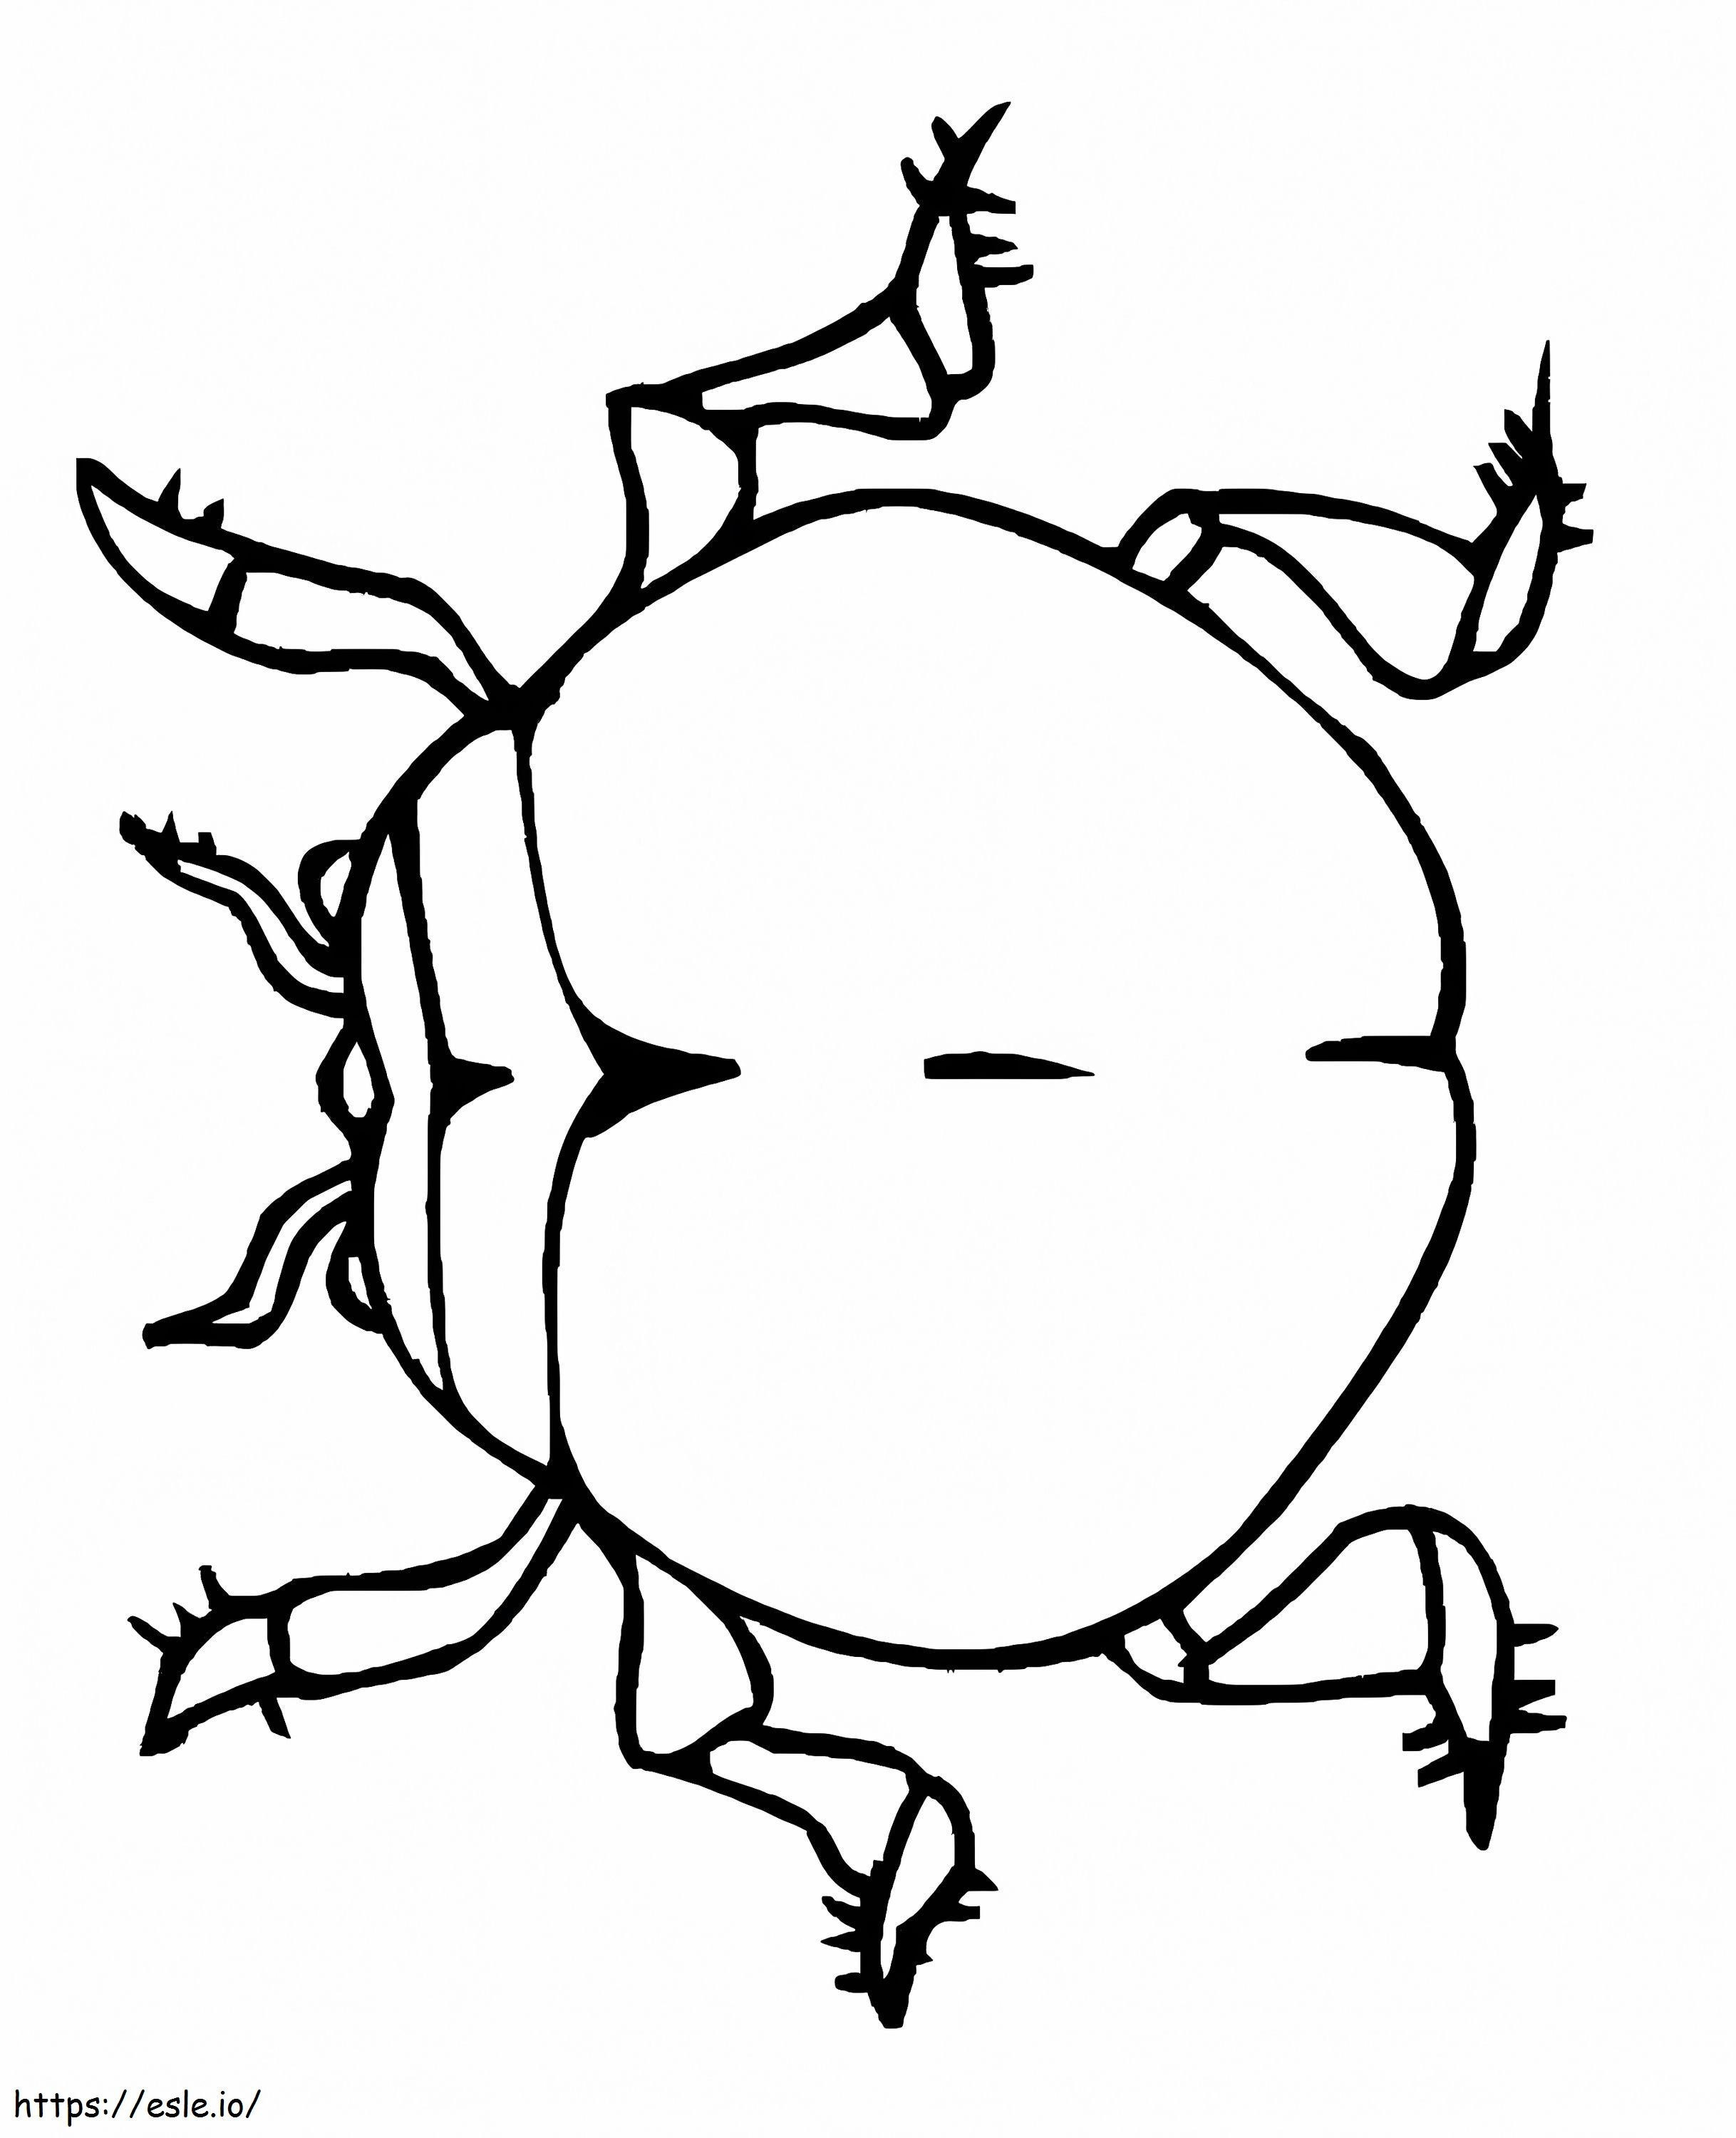 Printable Beetle coloring page